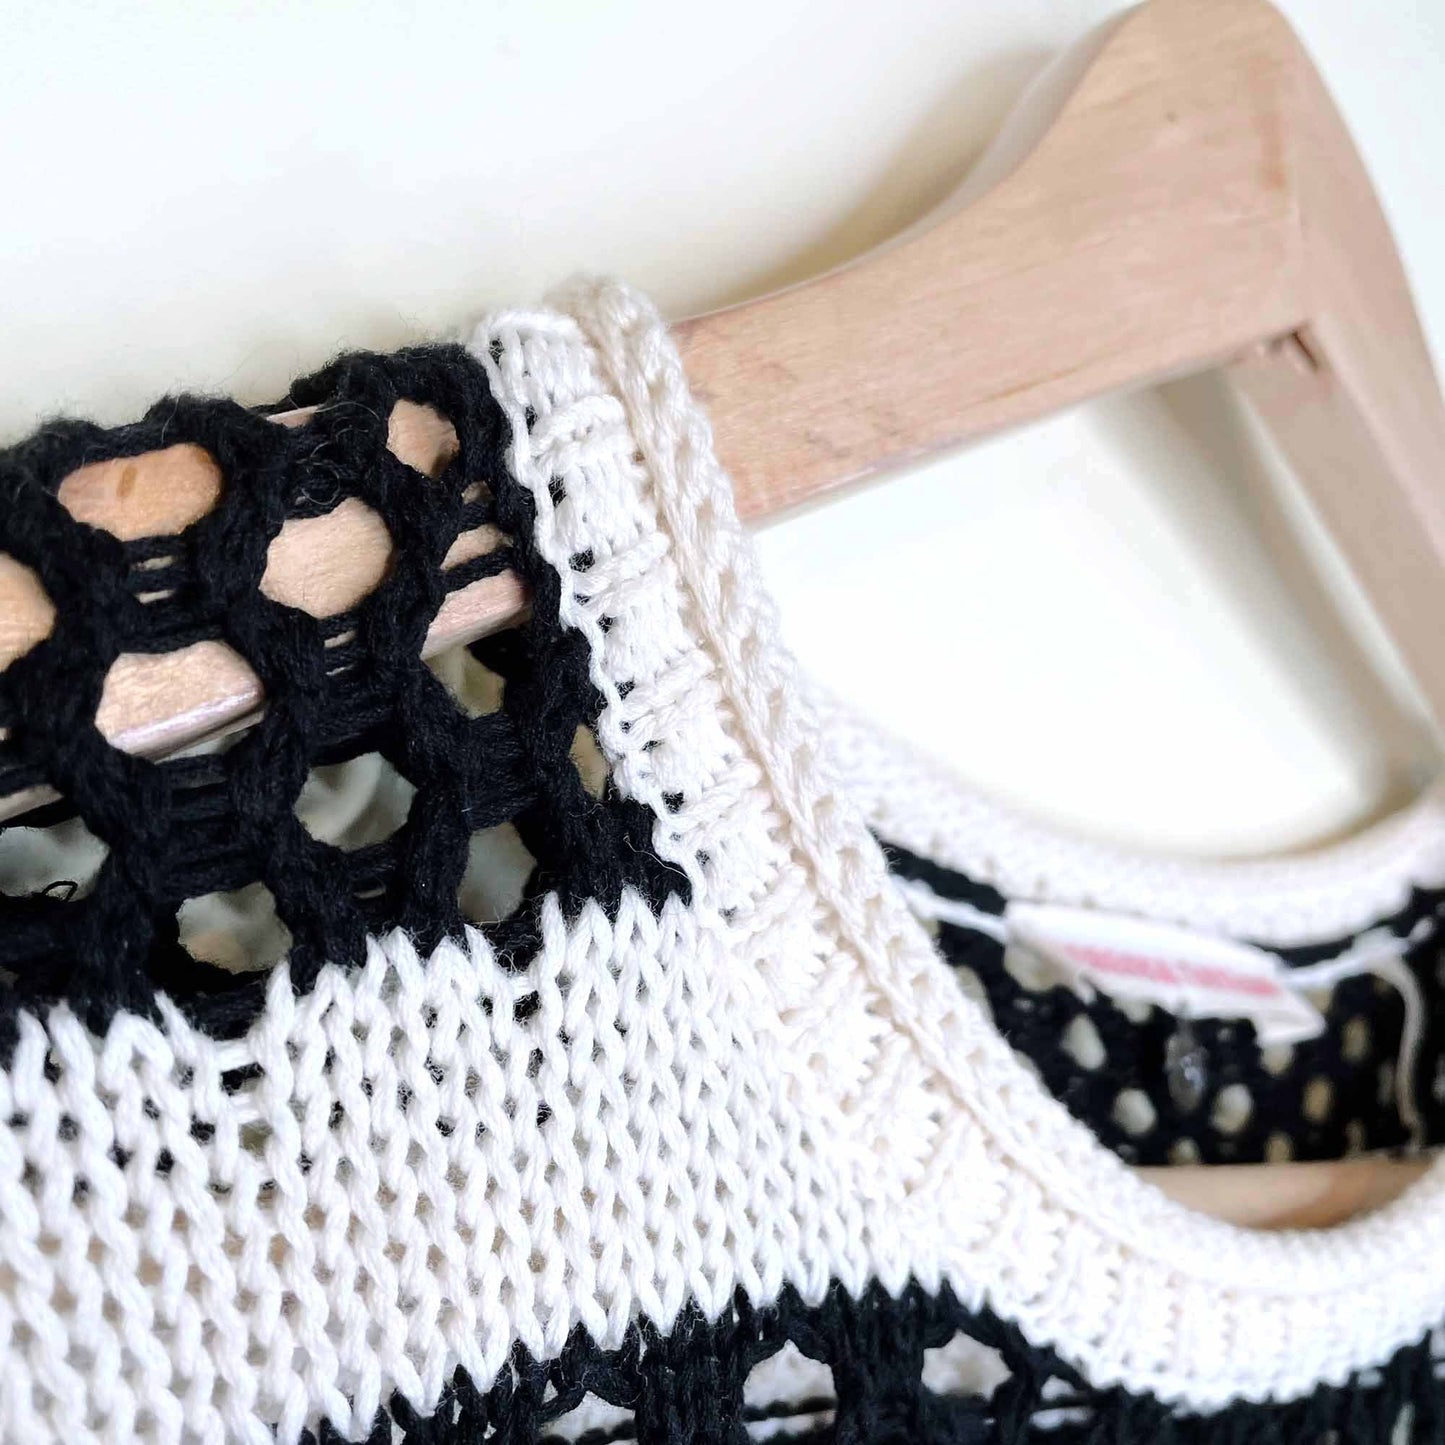 rebecca taylor black and white colour block knit sweater - size 2